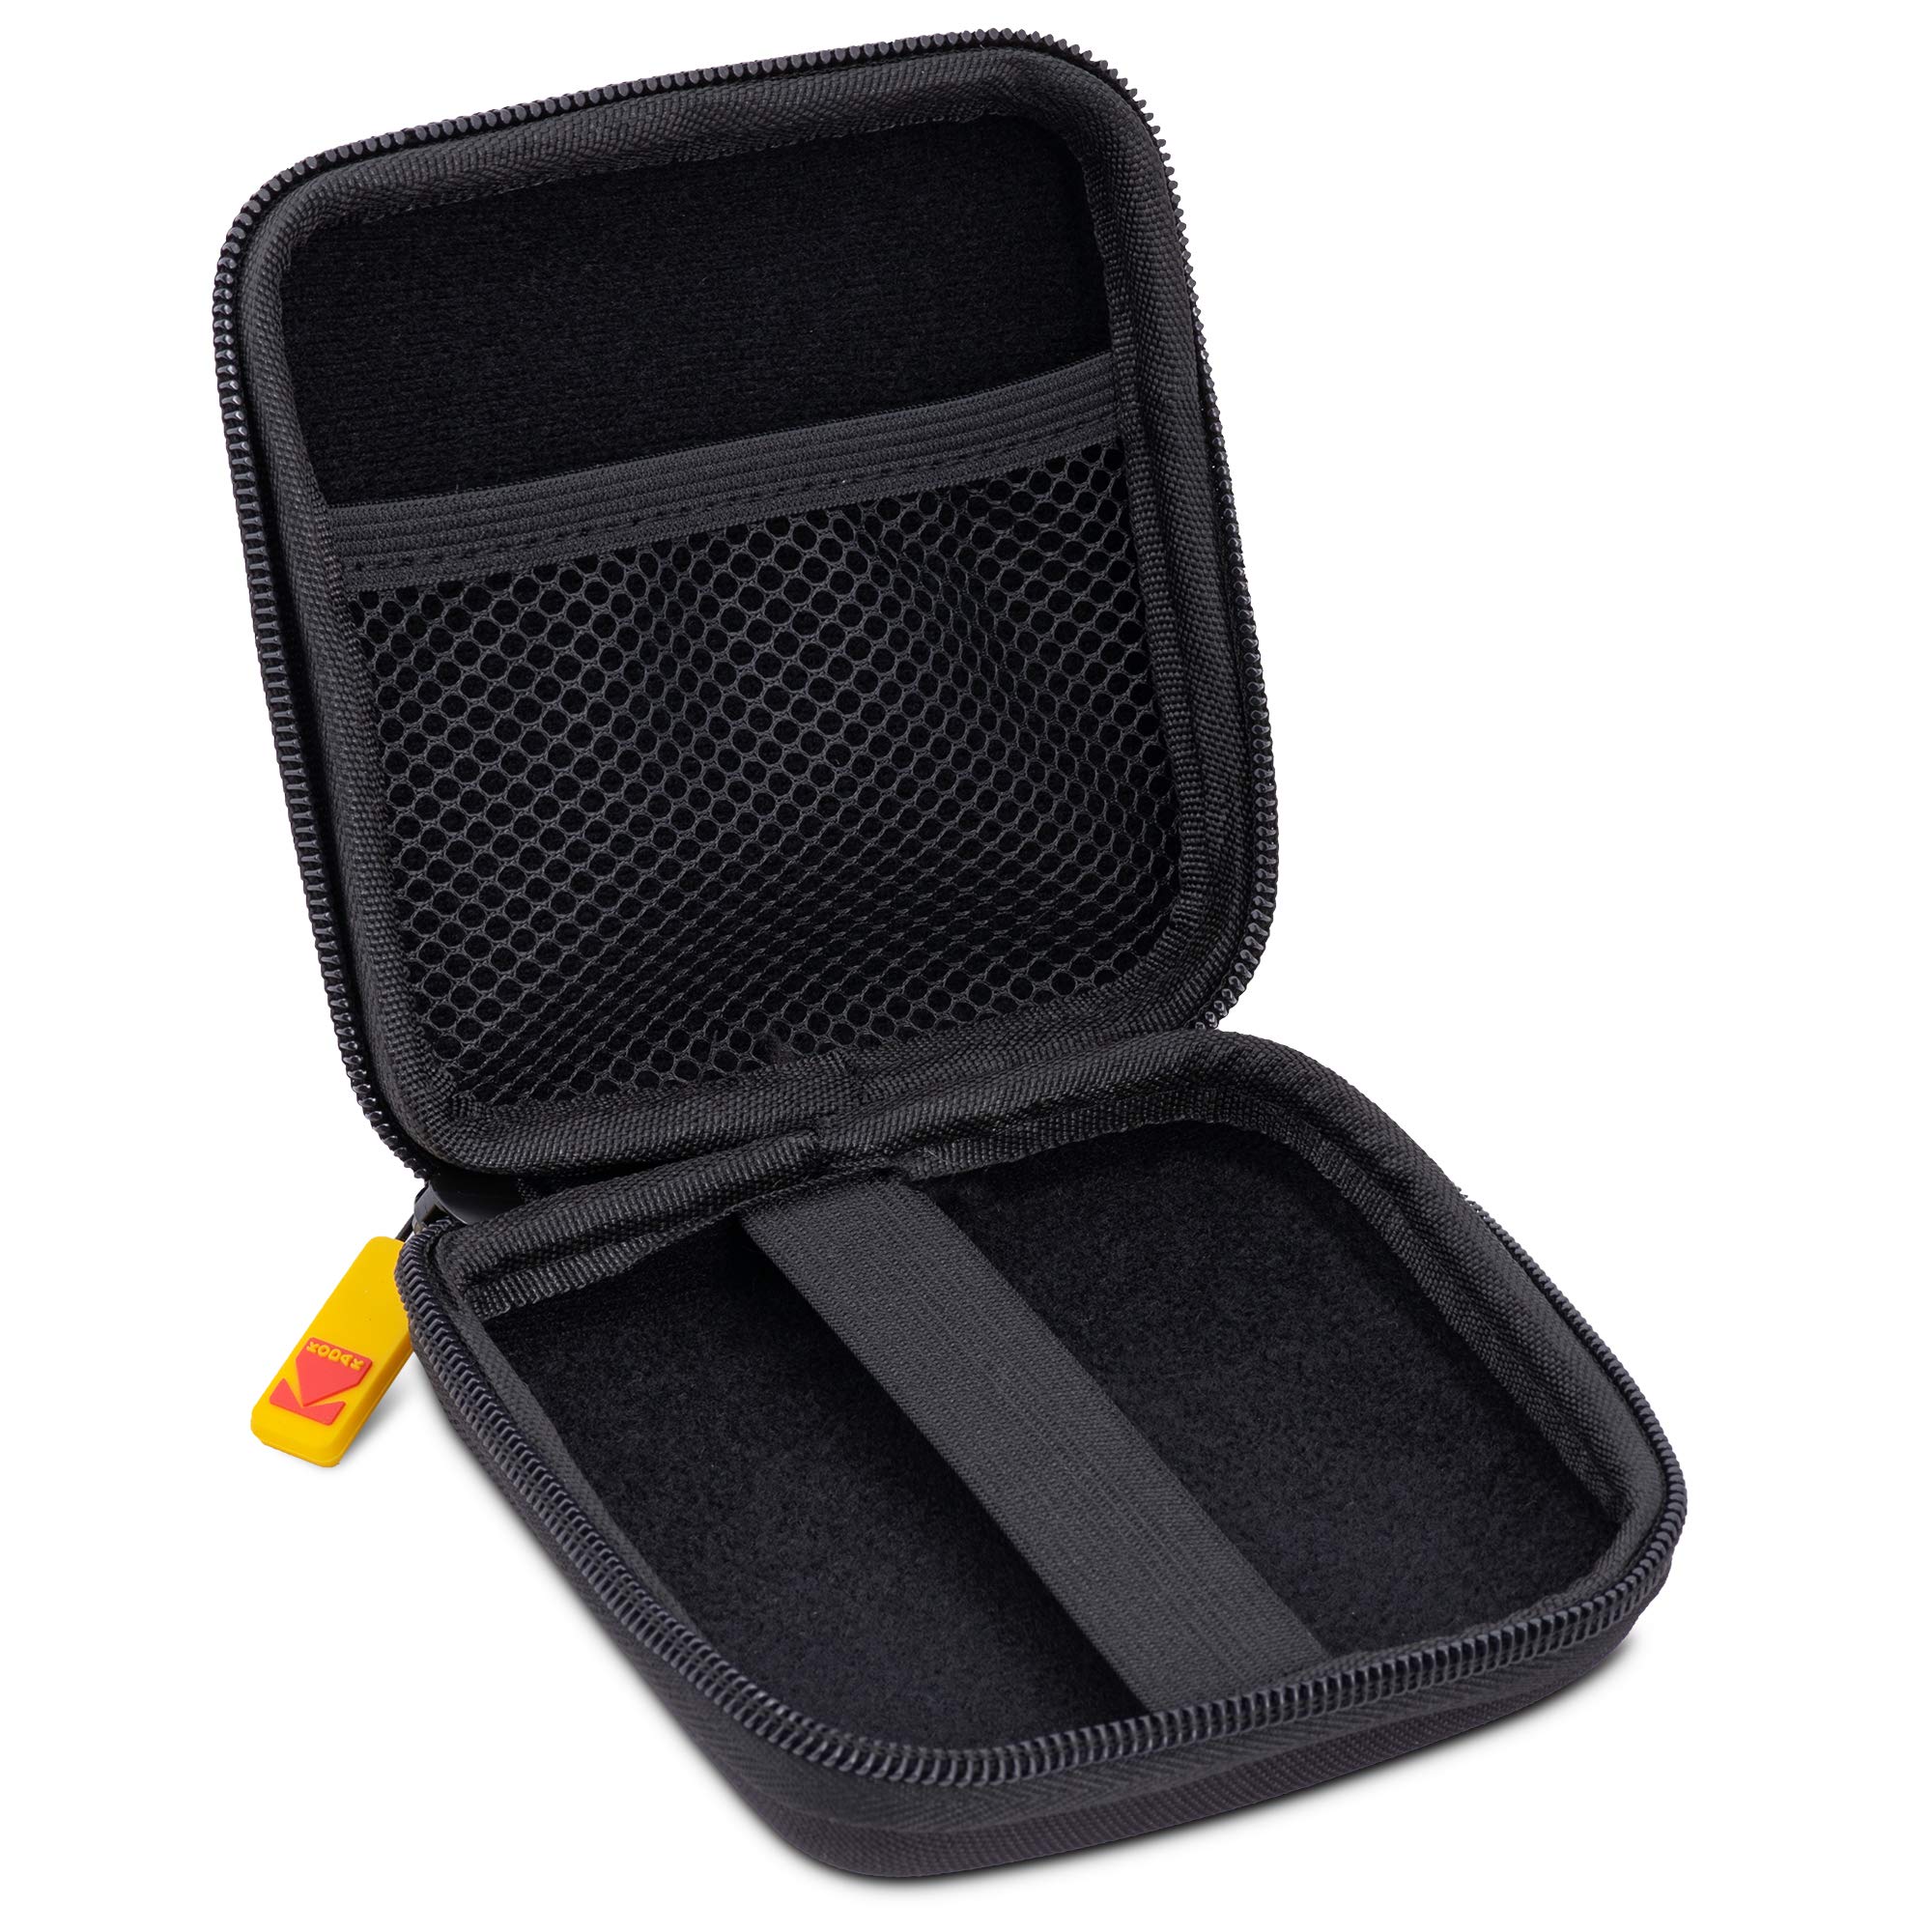 EVA Mini Projector Case Soft-Molded Hard-Shell Carry Bag for KODAK Luma 150 Portable Projector Shockproof, Dustproof & Water-Resistant Travel Protection Black